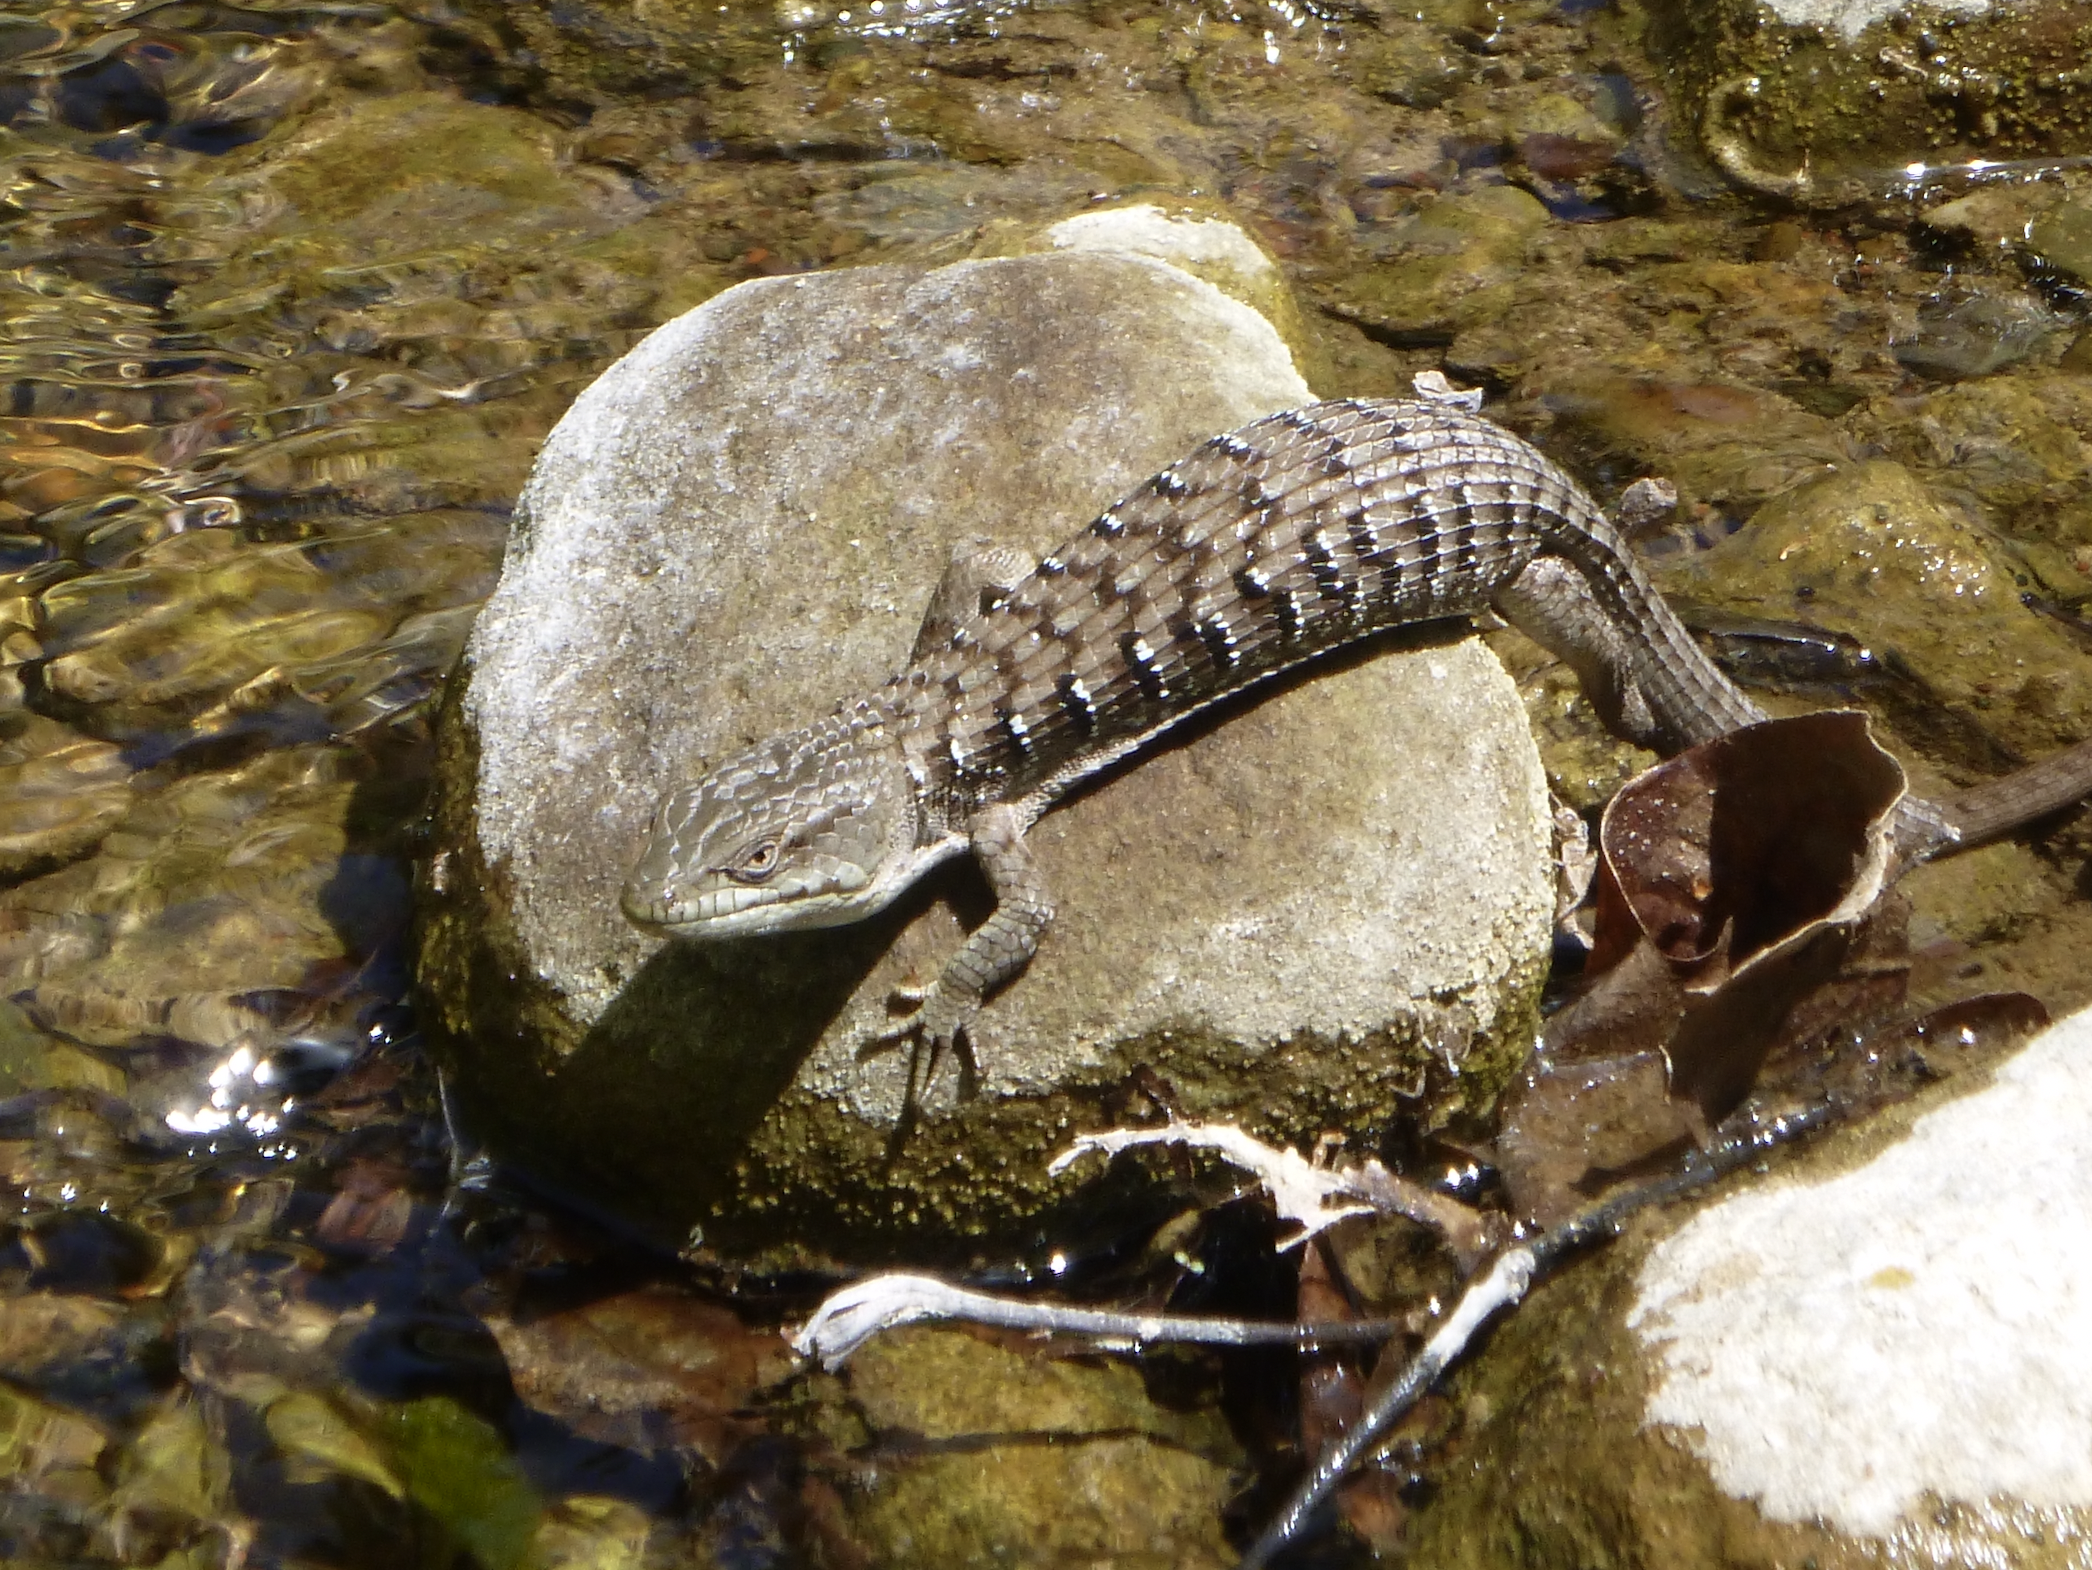 A chunky alligator lizard sunning on a stone in steelhead trout habitat in Gobernador Creek in Ojai, CA